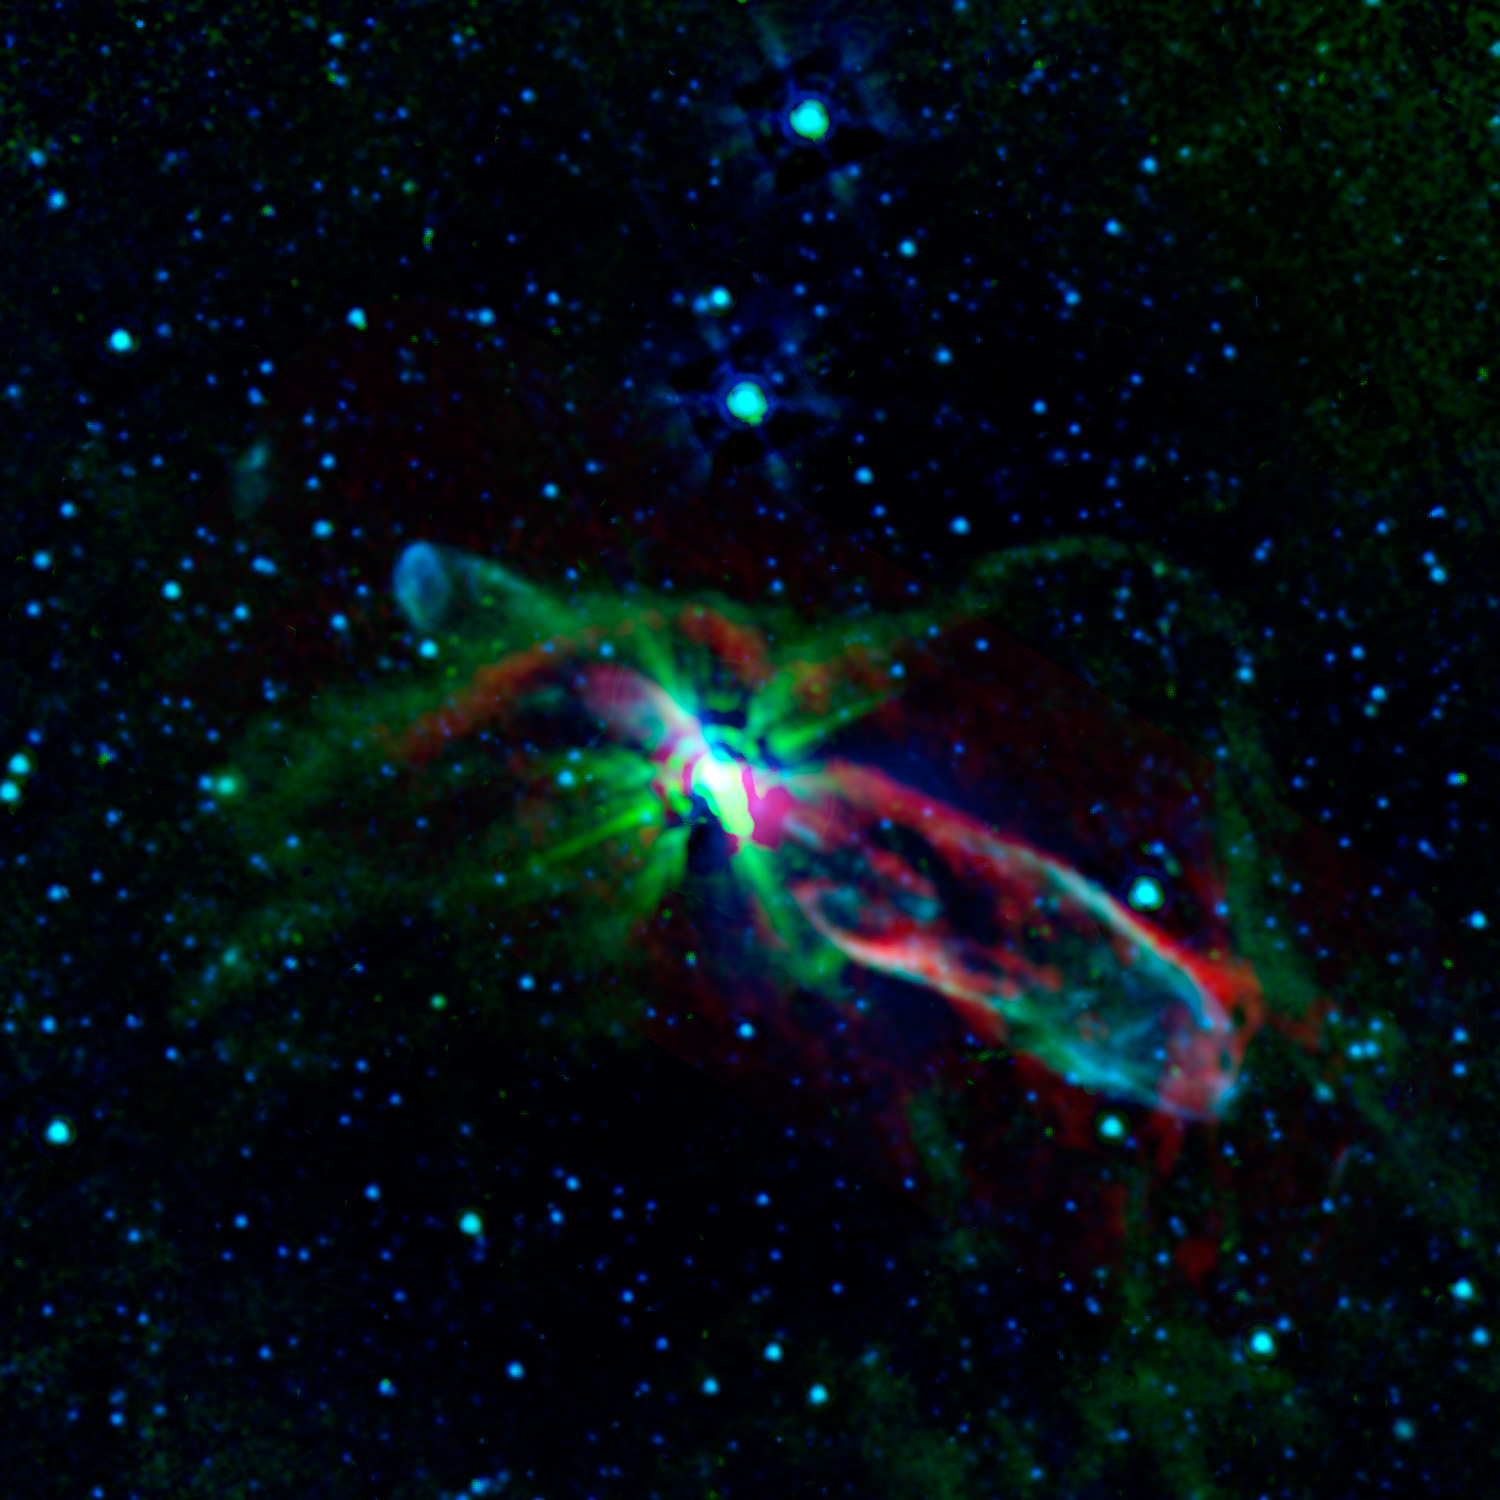 Bubbly Newborn Star Nasa Spitzer Space Telescope